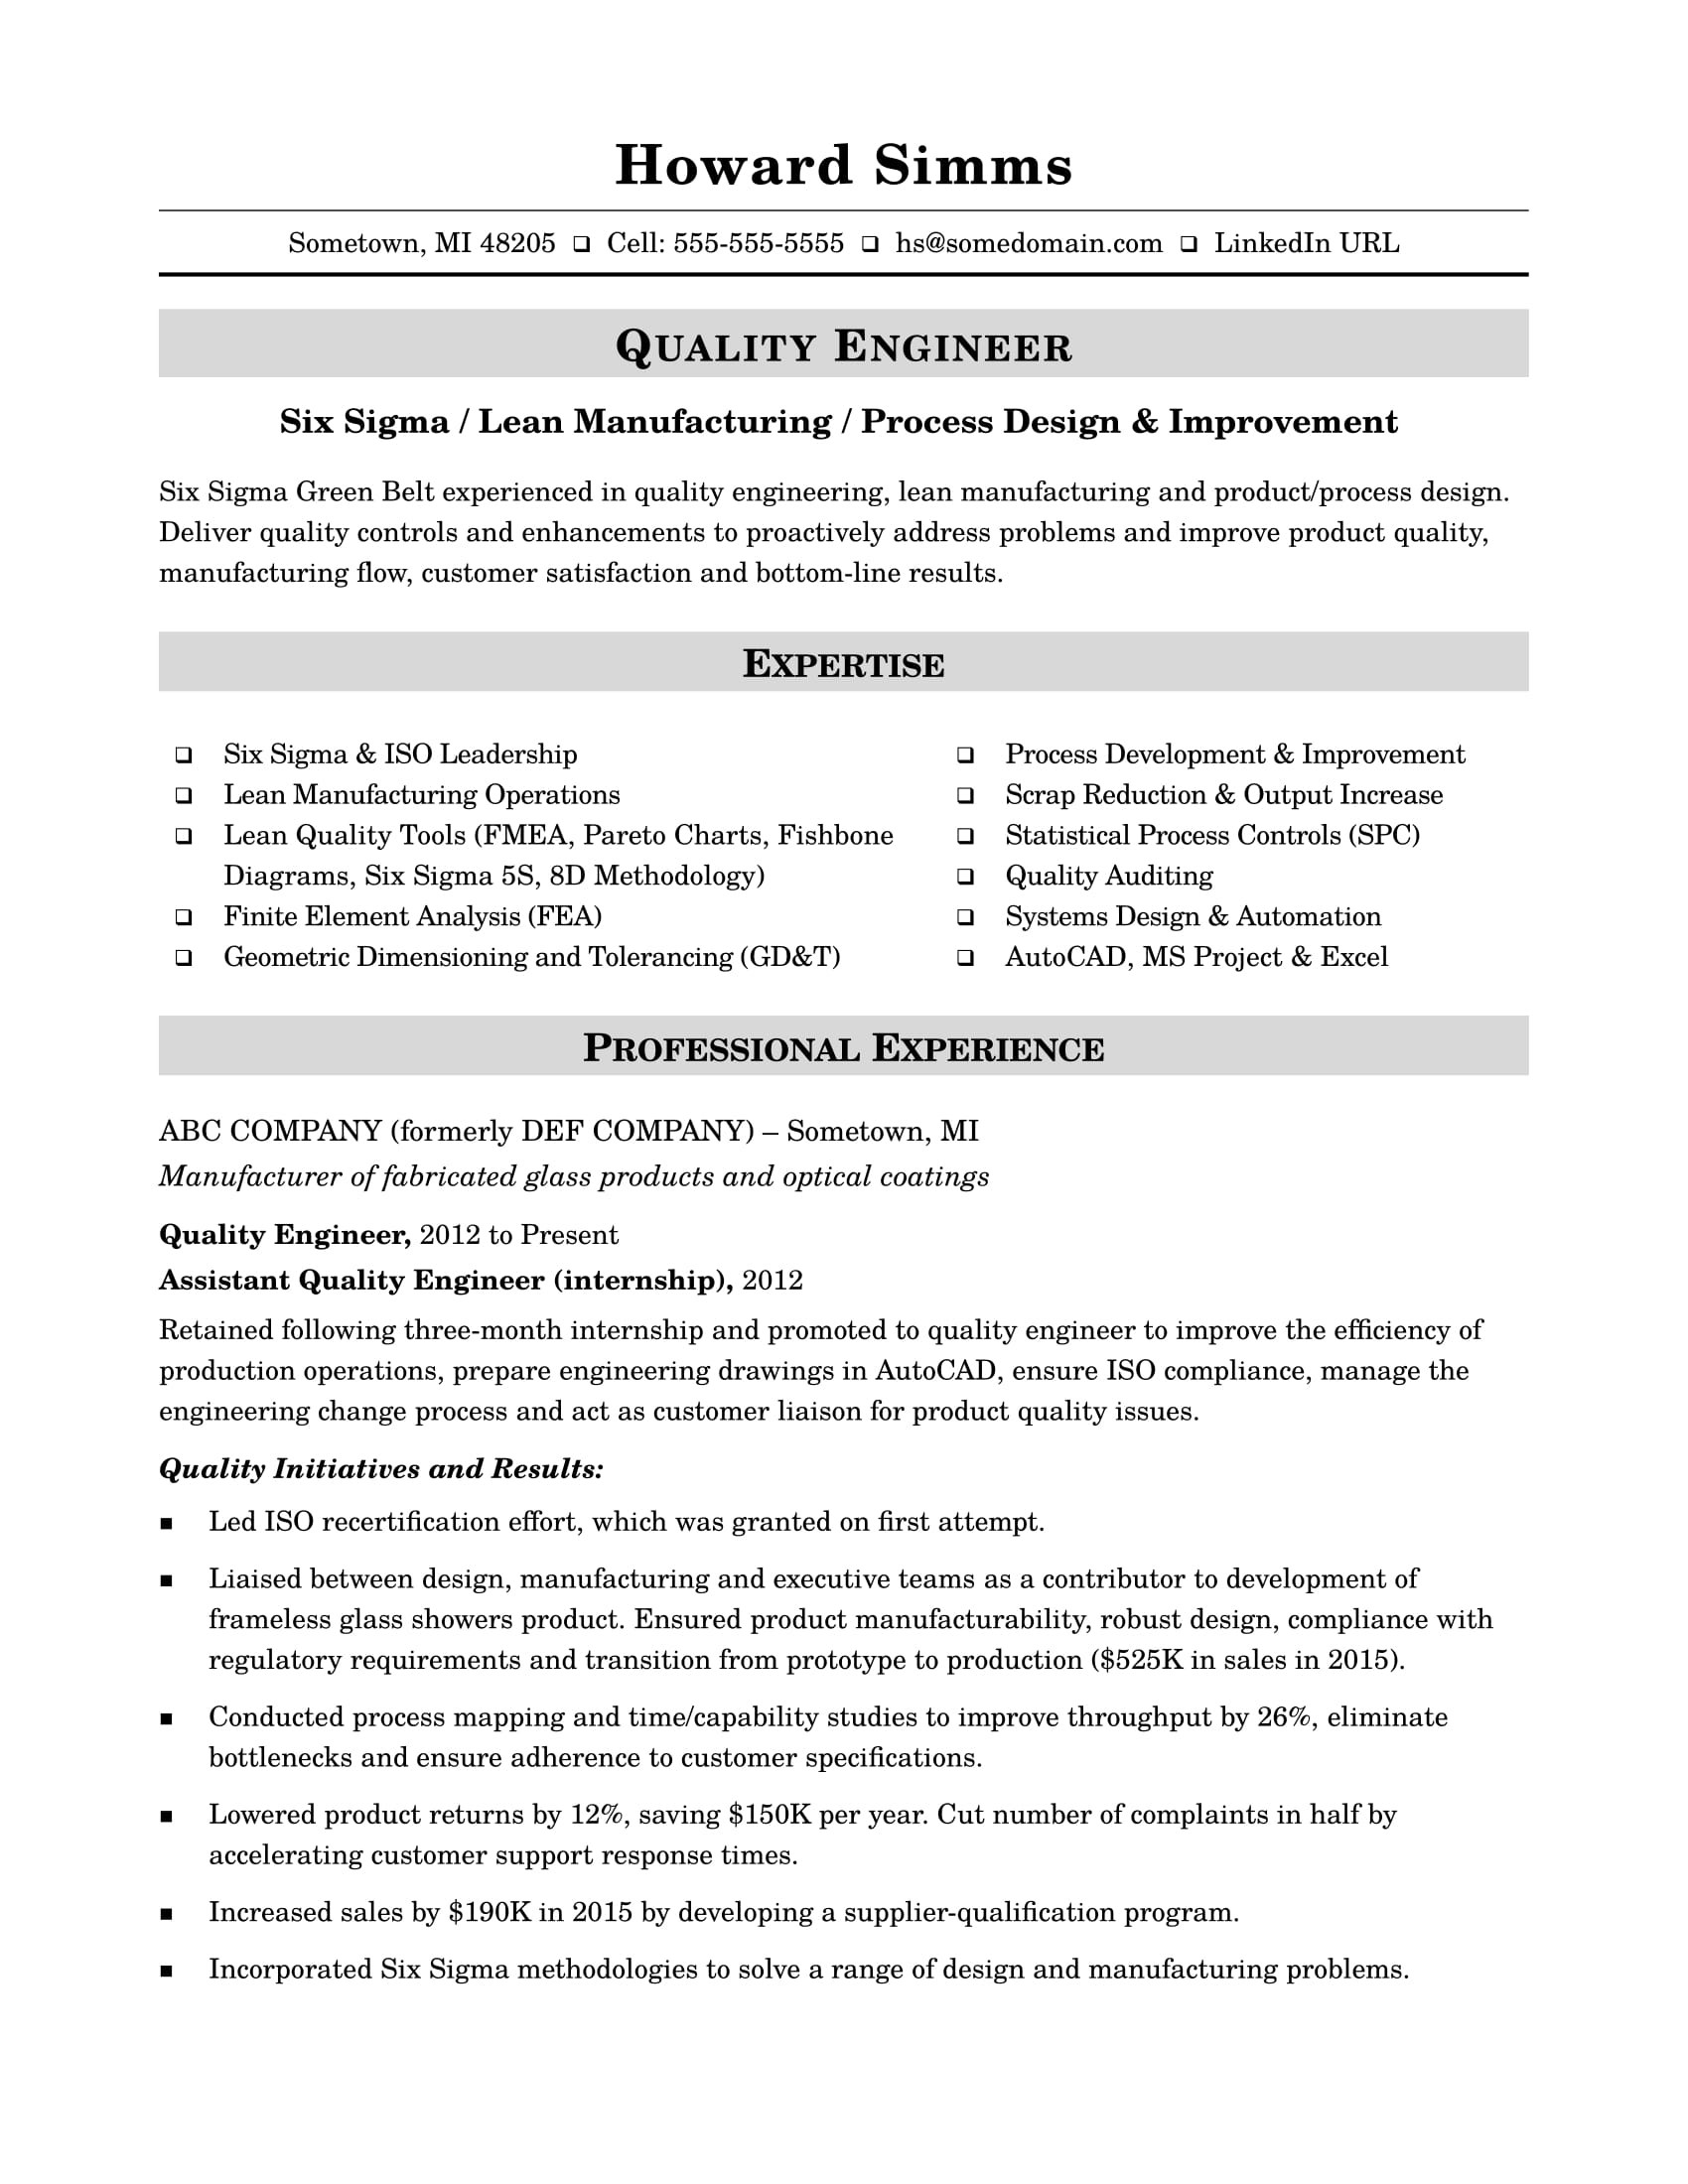 Sample Resume for Quality Engineer In Automobile Pdf Sample Resume for A Midlevel Quality Engineer Monster.com